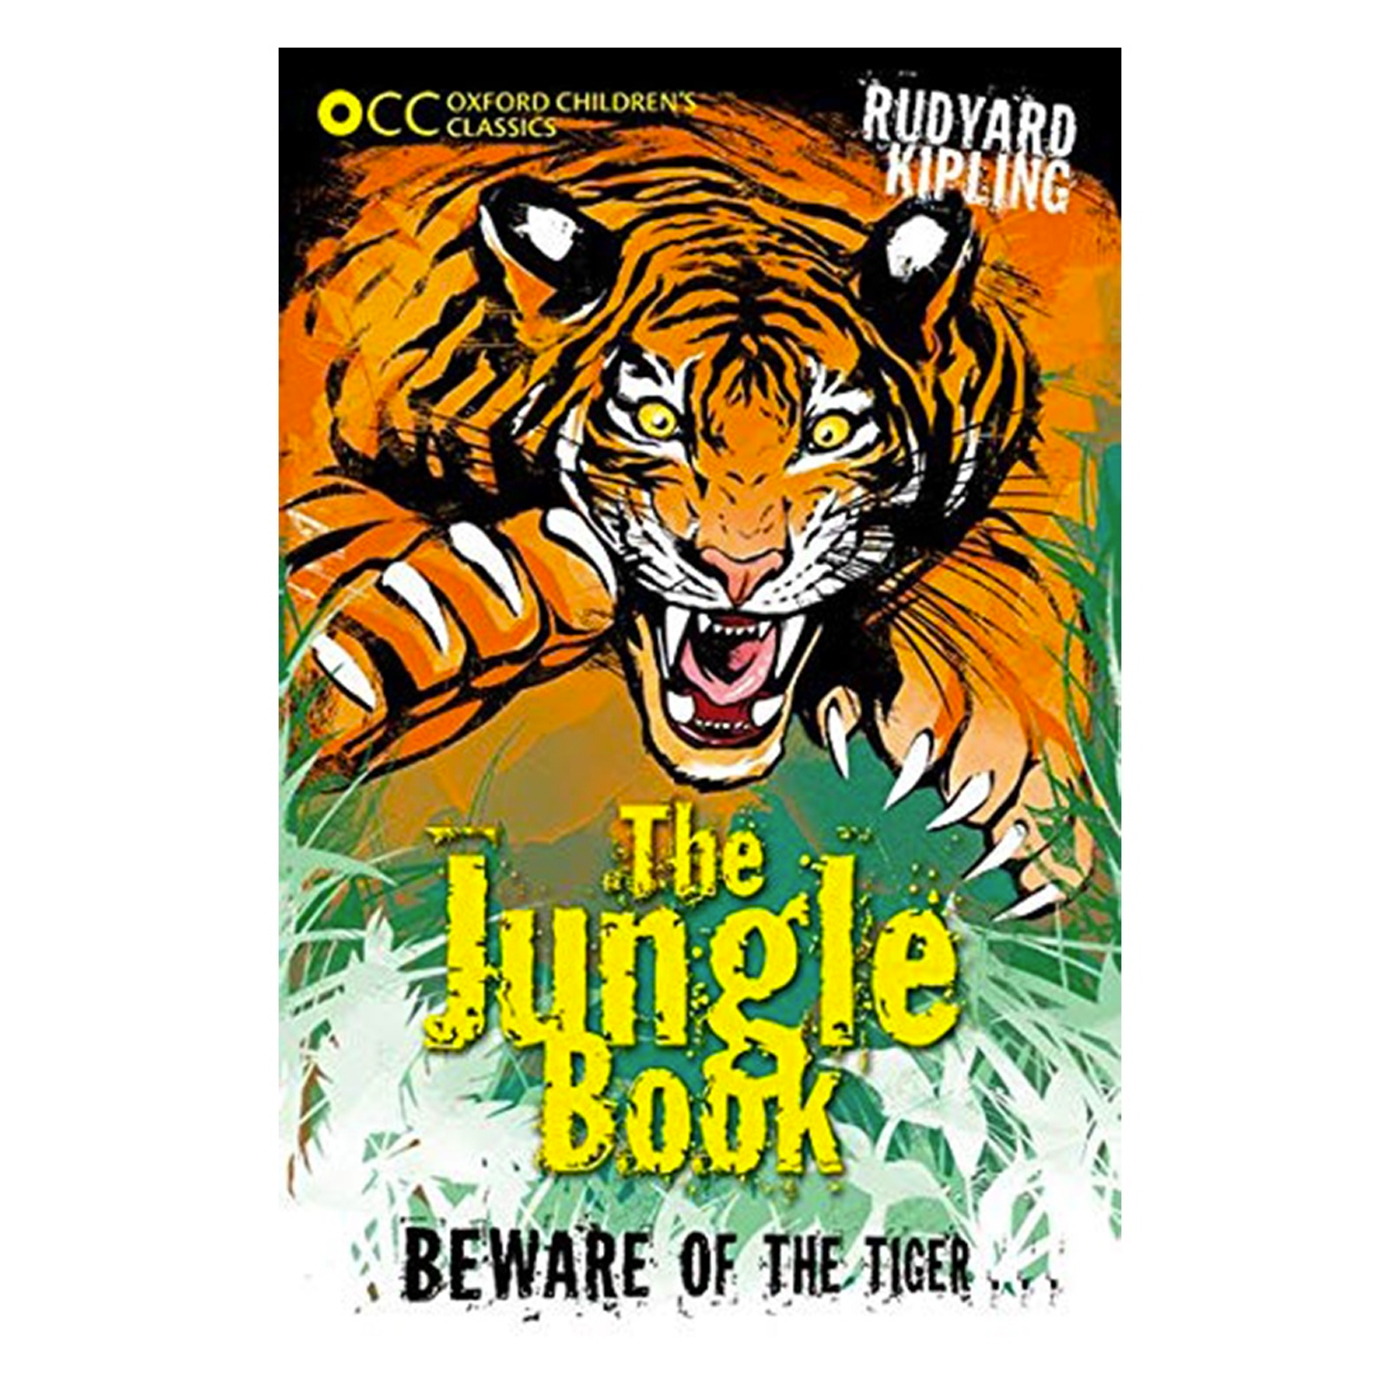  Oxford Childrens Classics: The Jungle Book